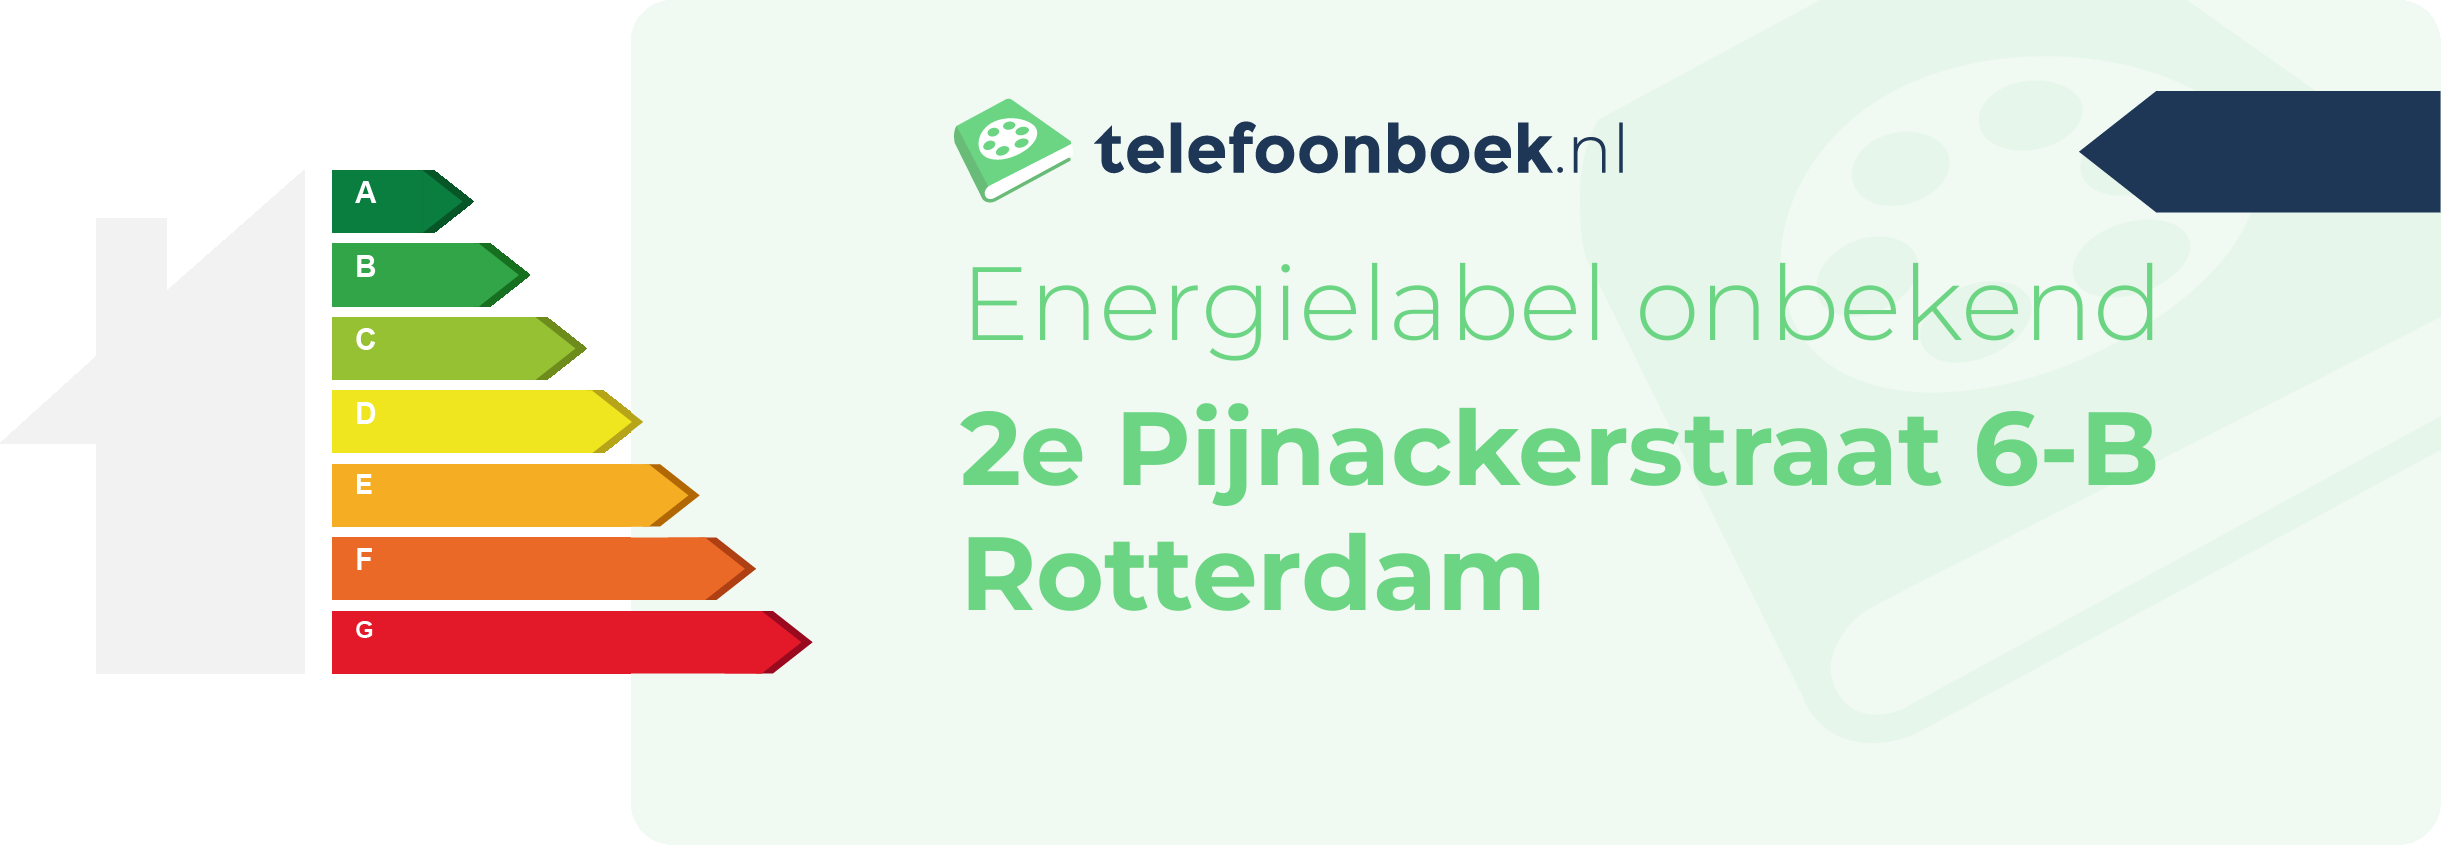 Energielabel 2e Pijnackerstraat 6-B Rotterdam